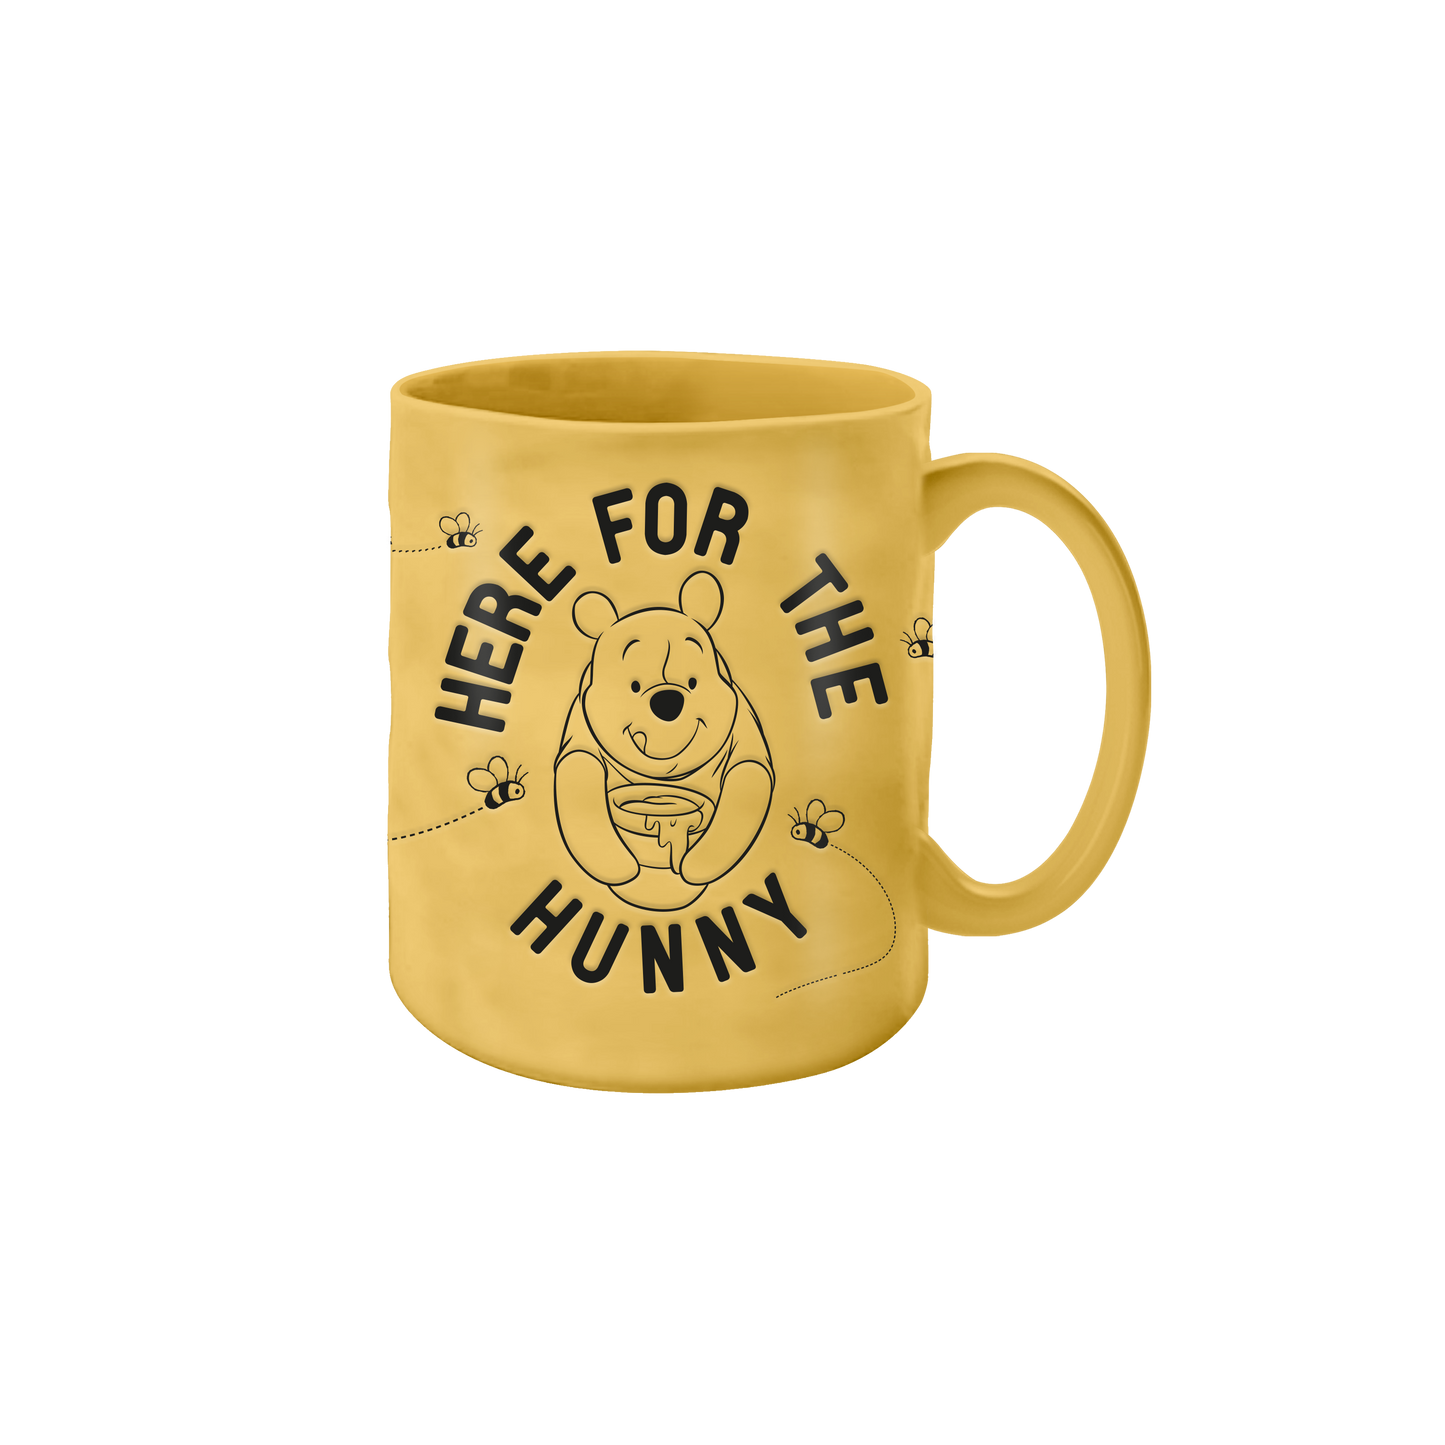 Winnie the Pooh "Here for the Hunny" Pottery Mug